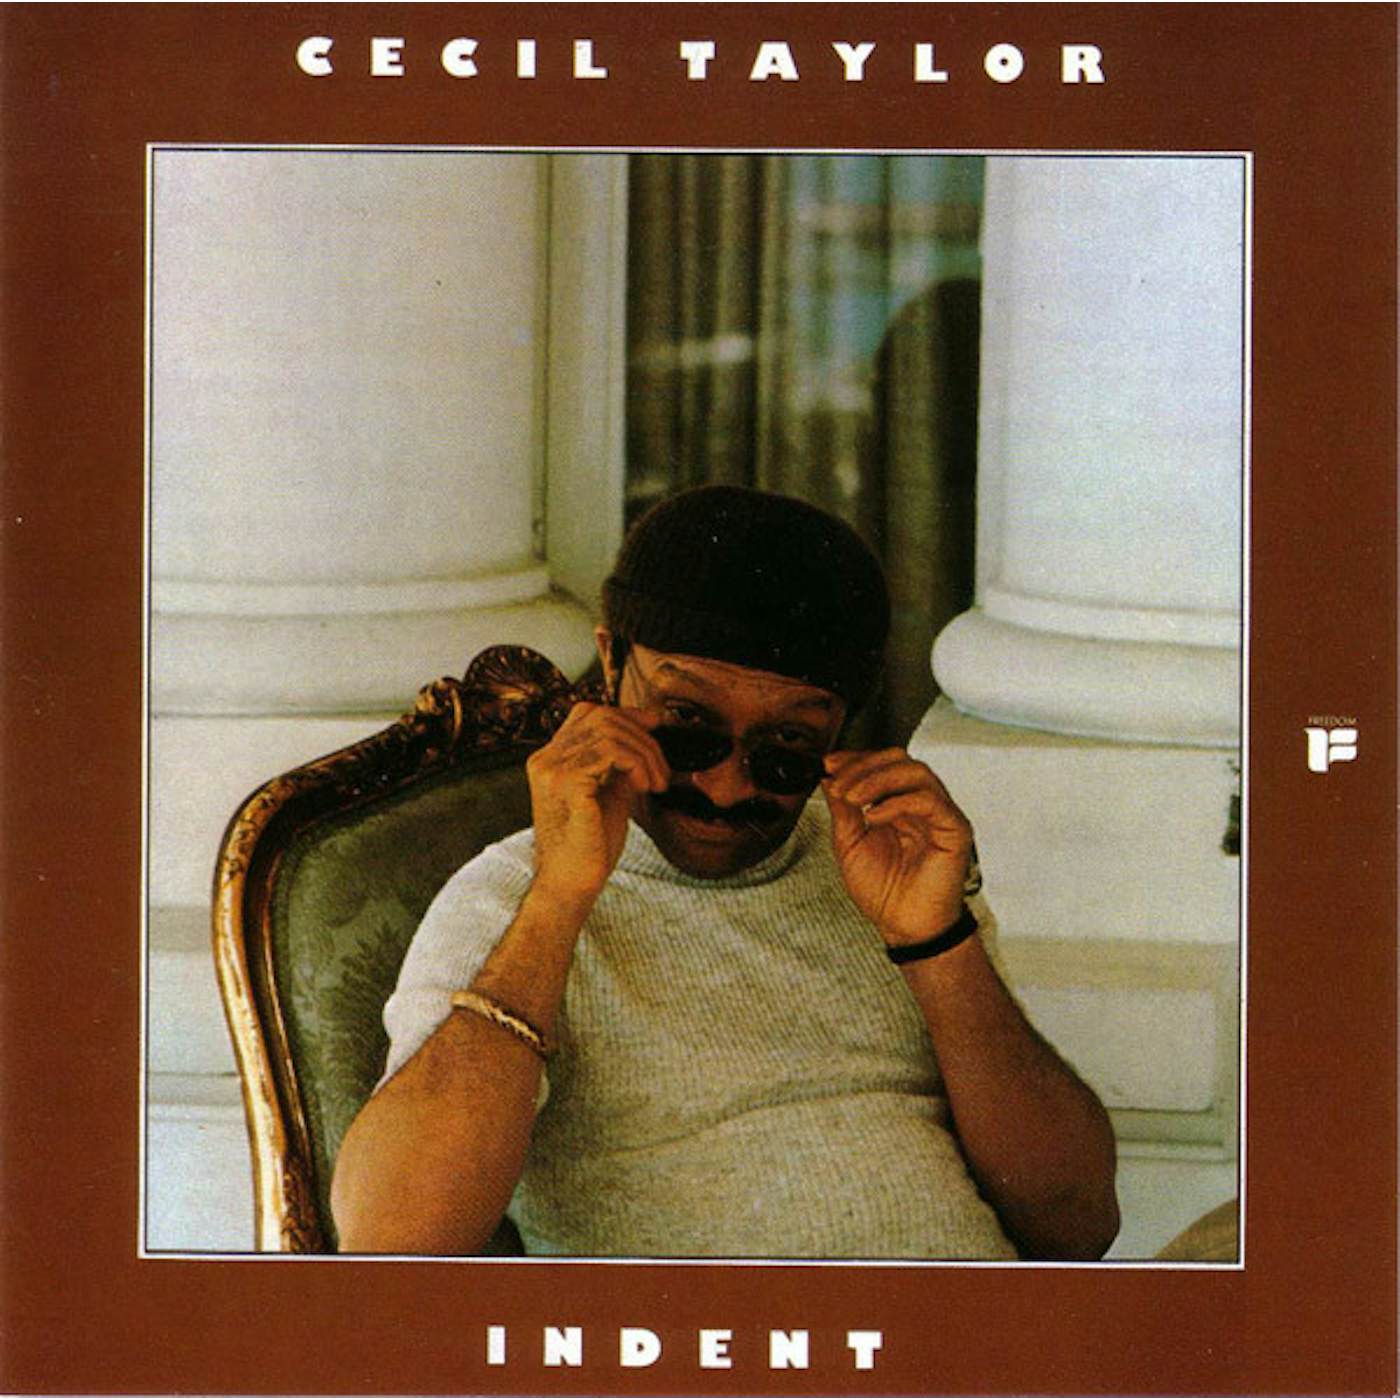 Cecil Taylor Indent Vinyl Record